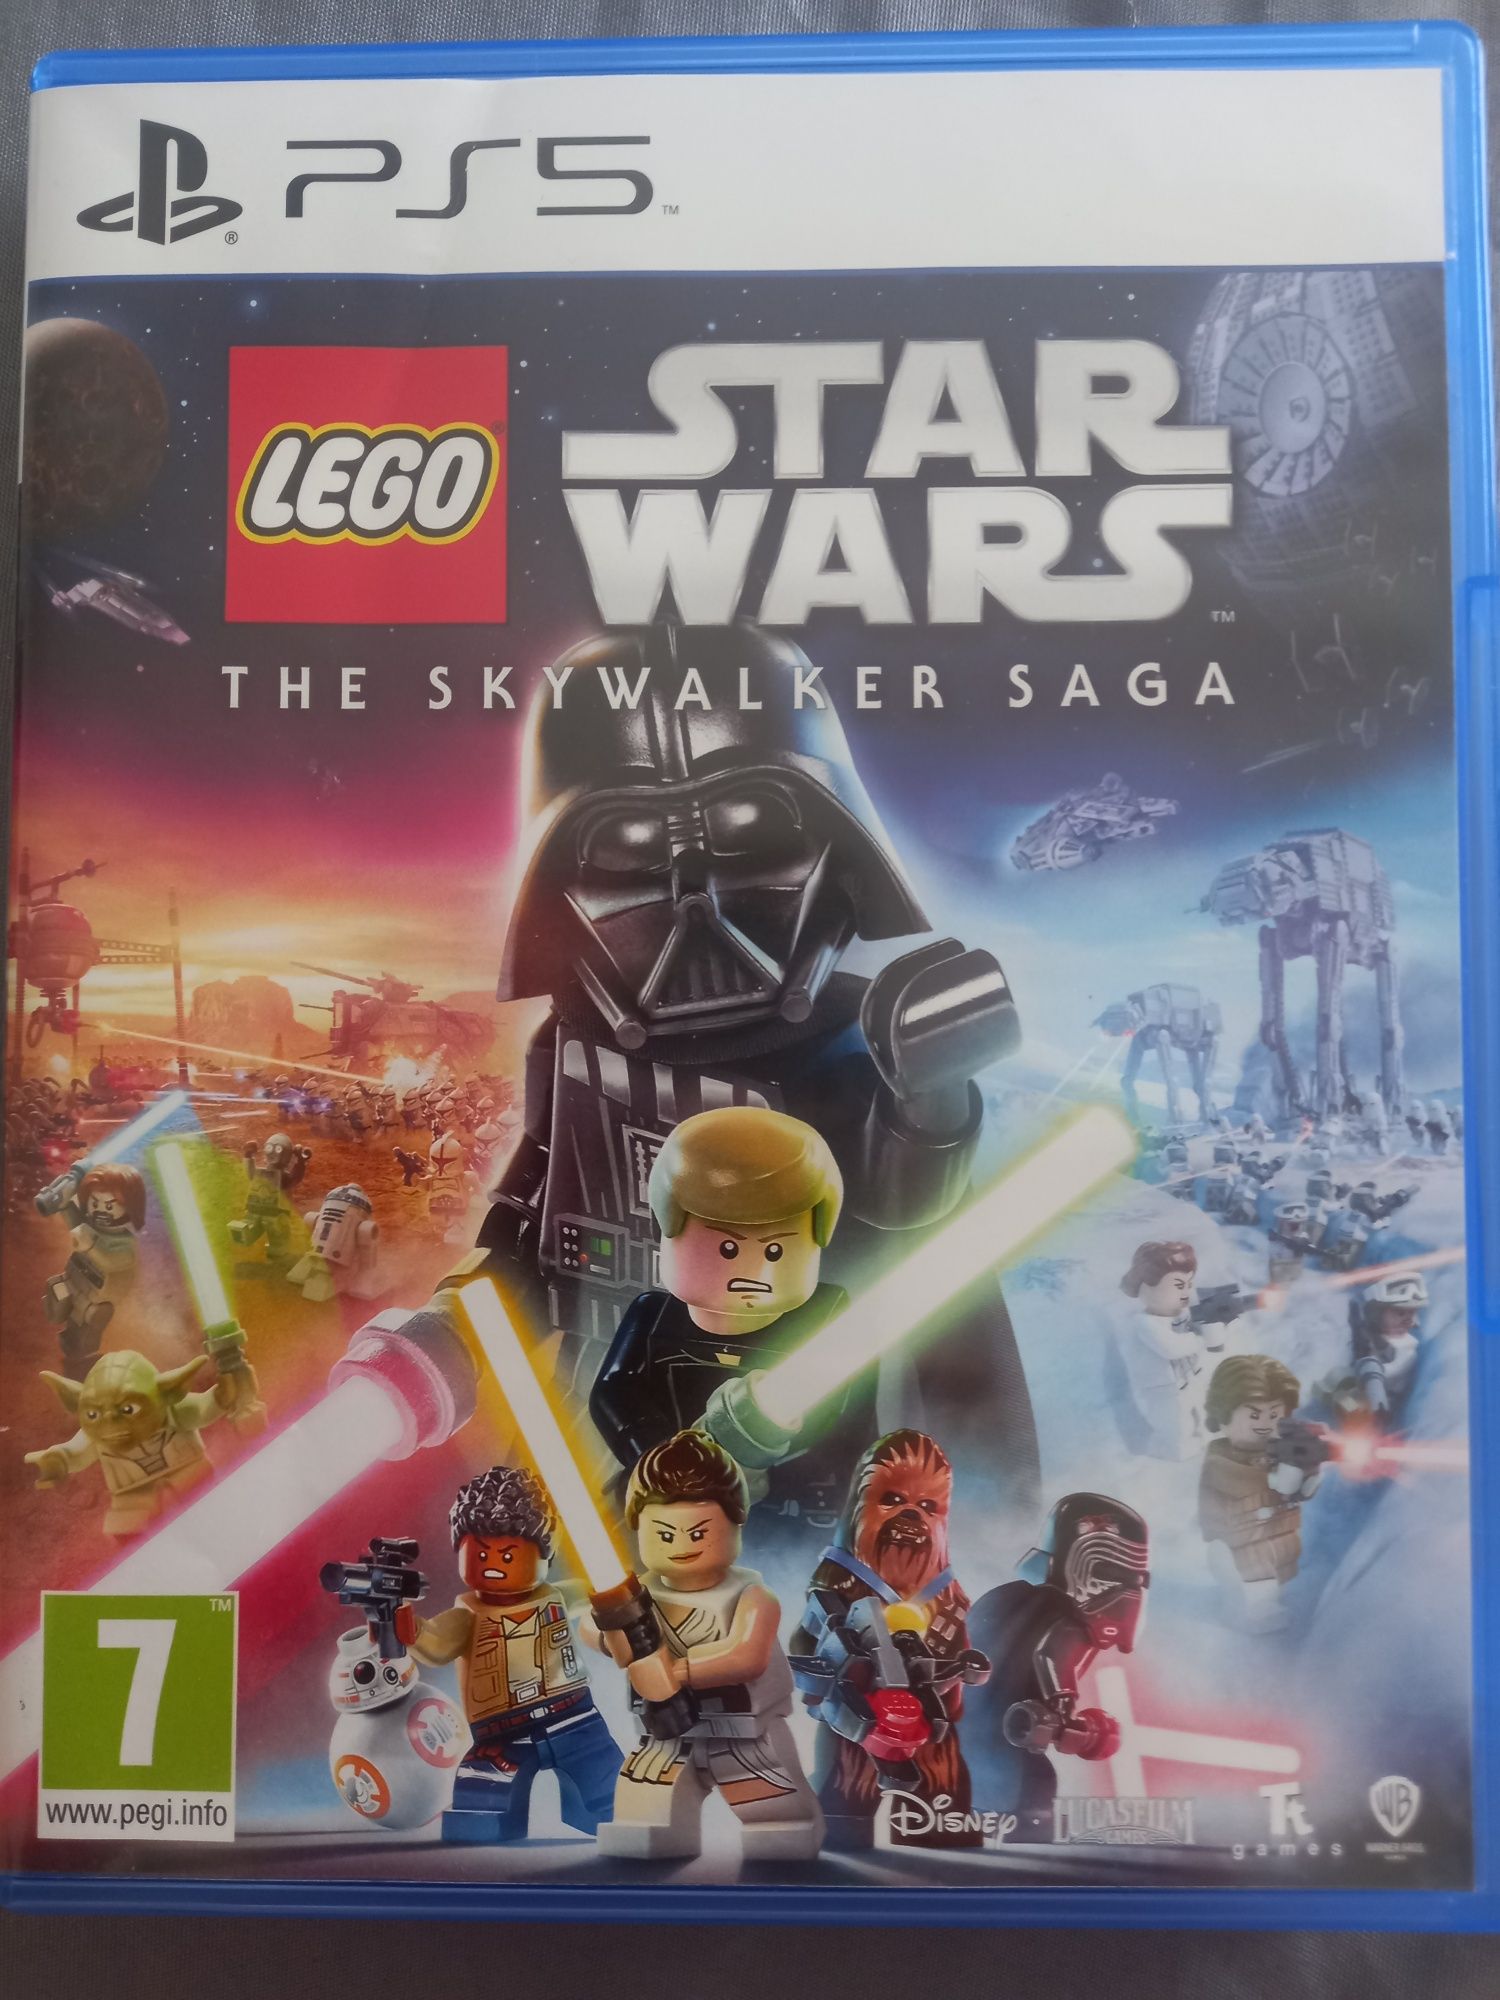 PS5 - Star Wars Lego